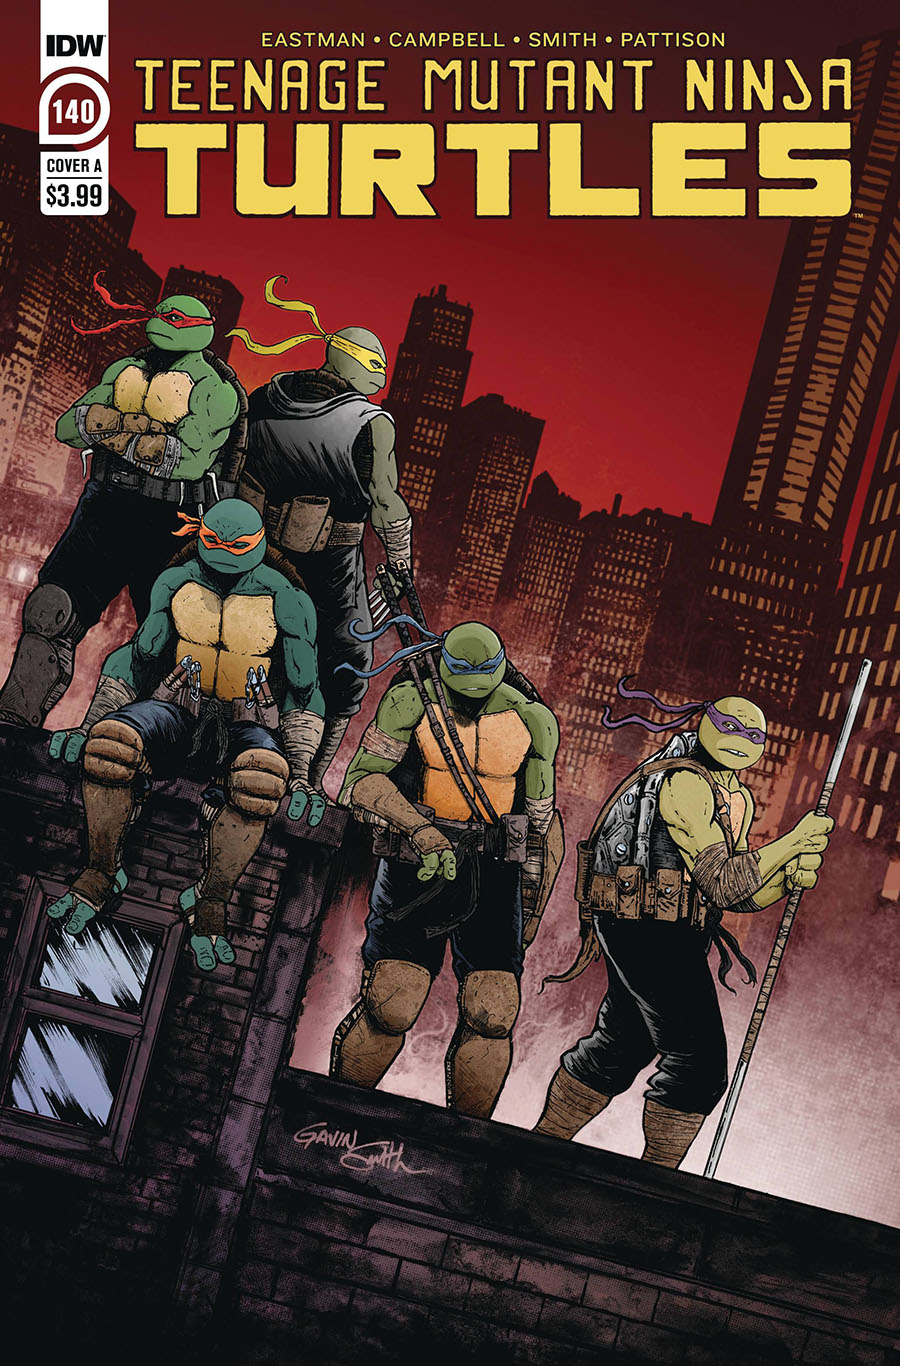 Teenage Mutant Ninja Turtles Vol 5 #140 Cover A Regular Gavin Smith Cover